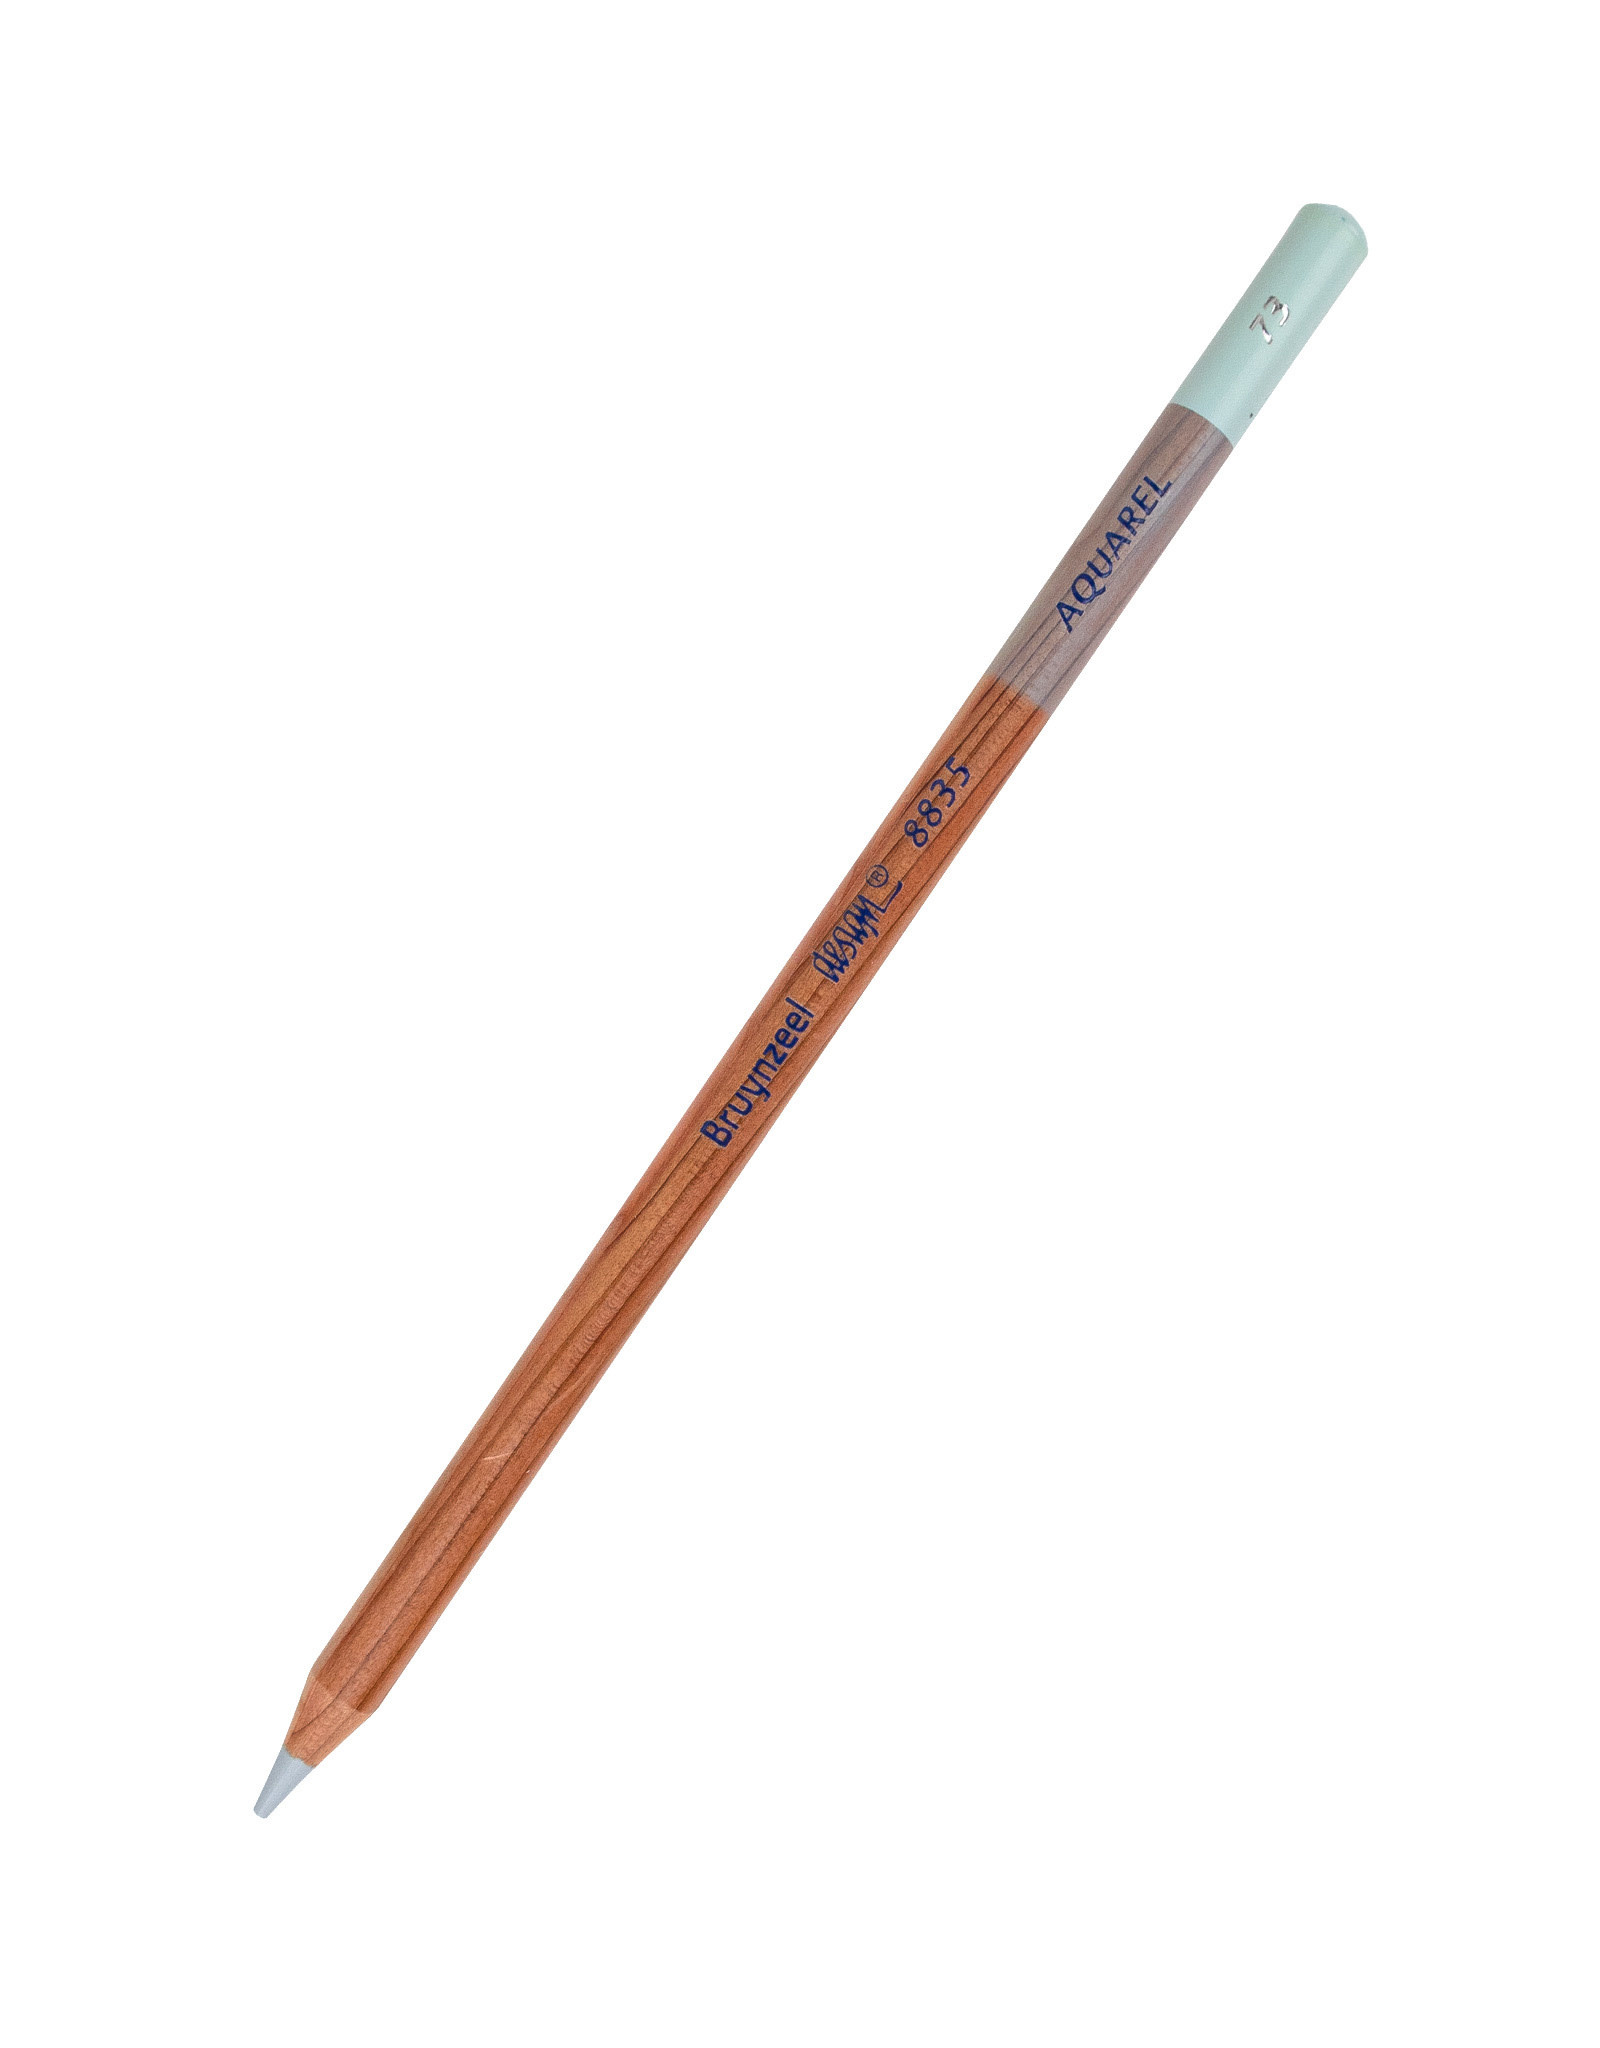 Royal Talens Bruynzeel Design Aquarel Pencil, Light Grey